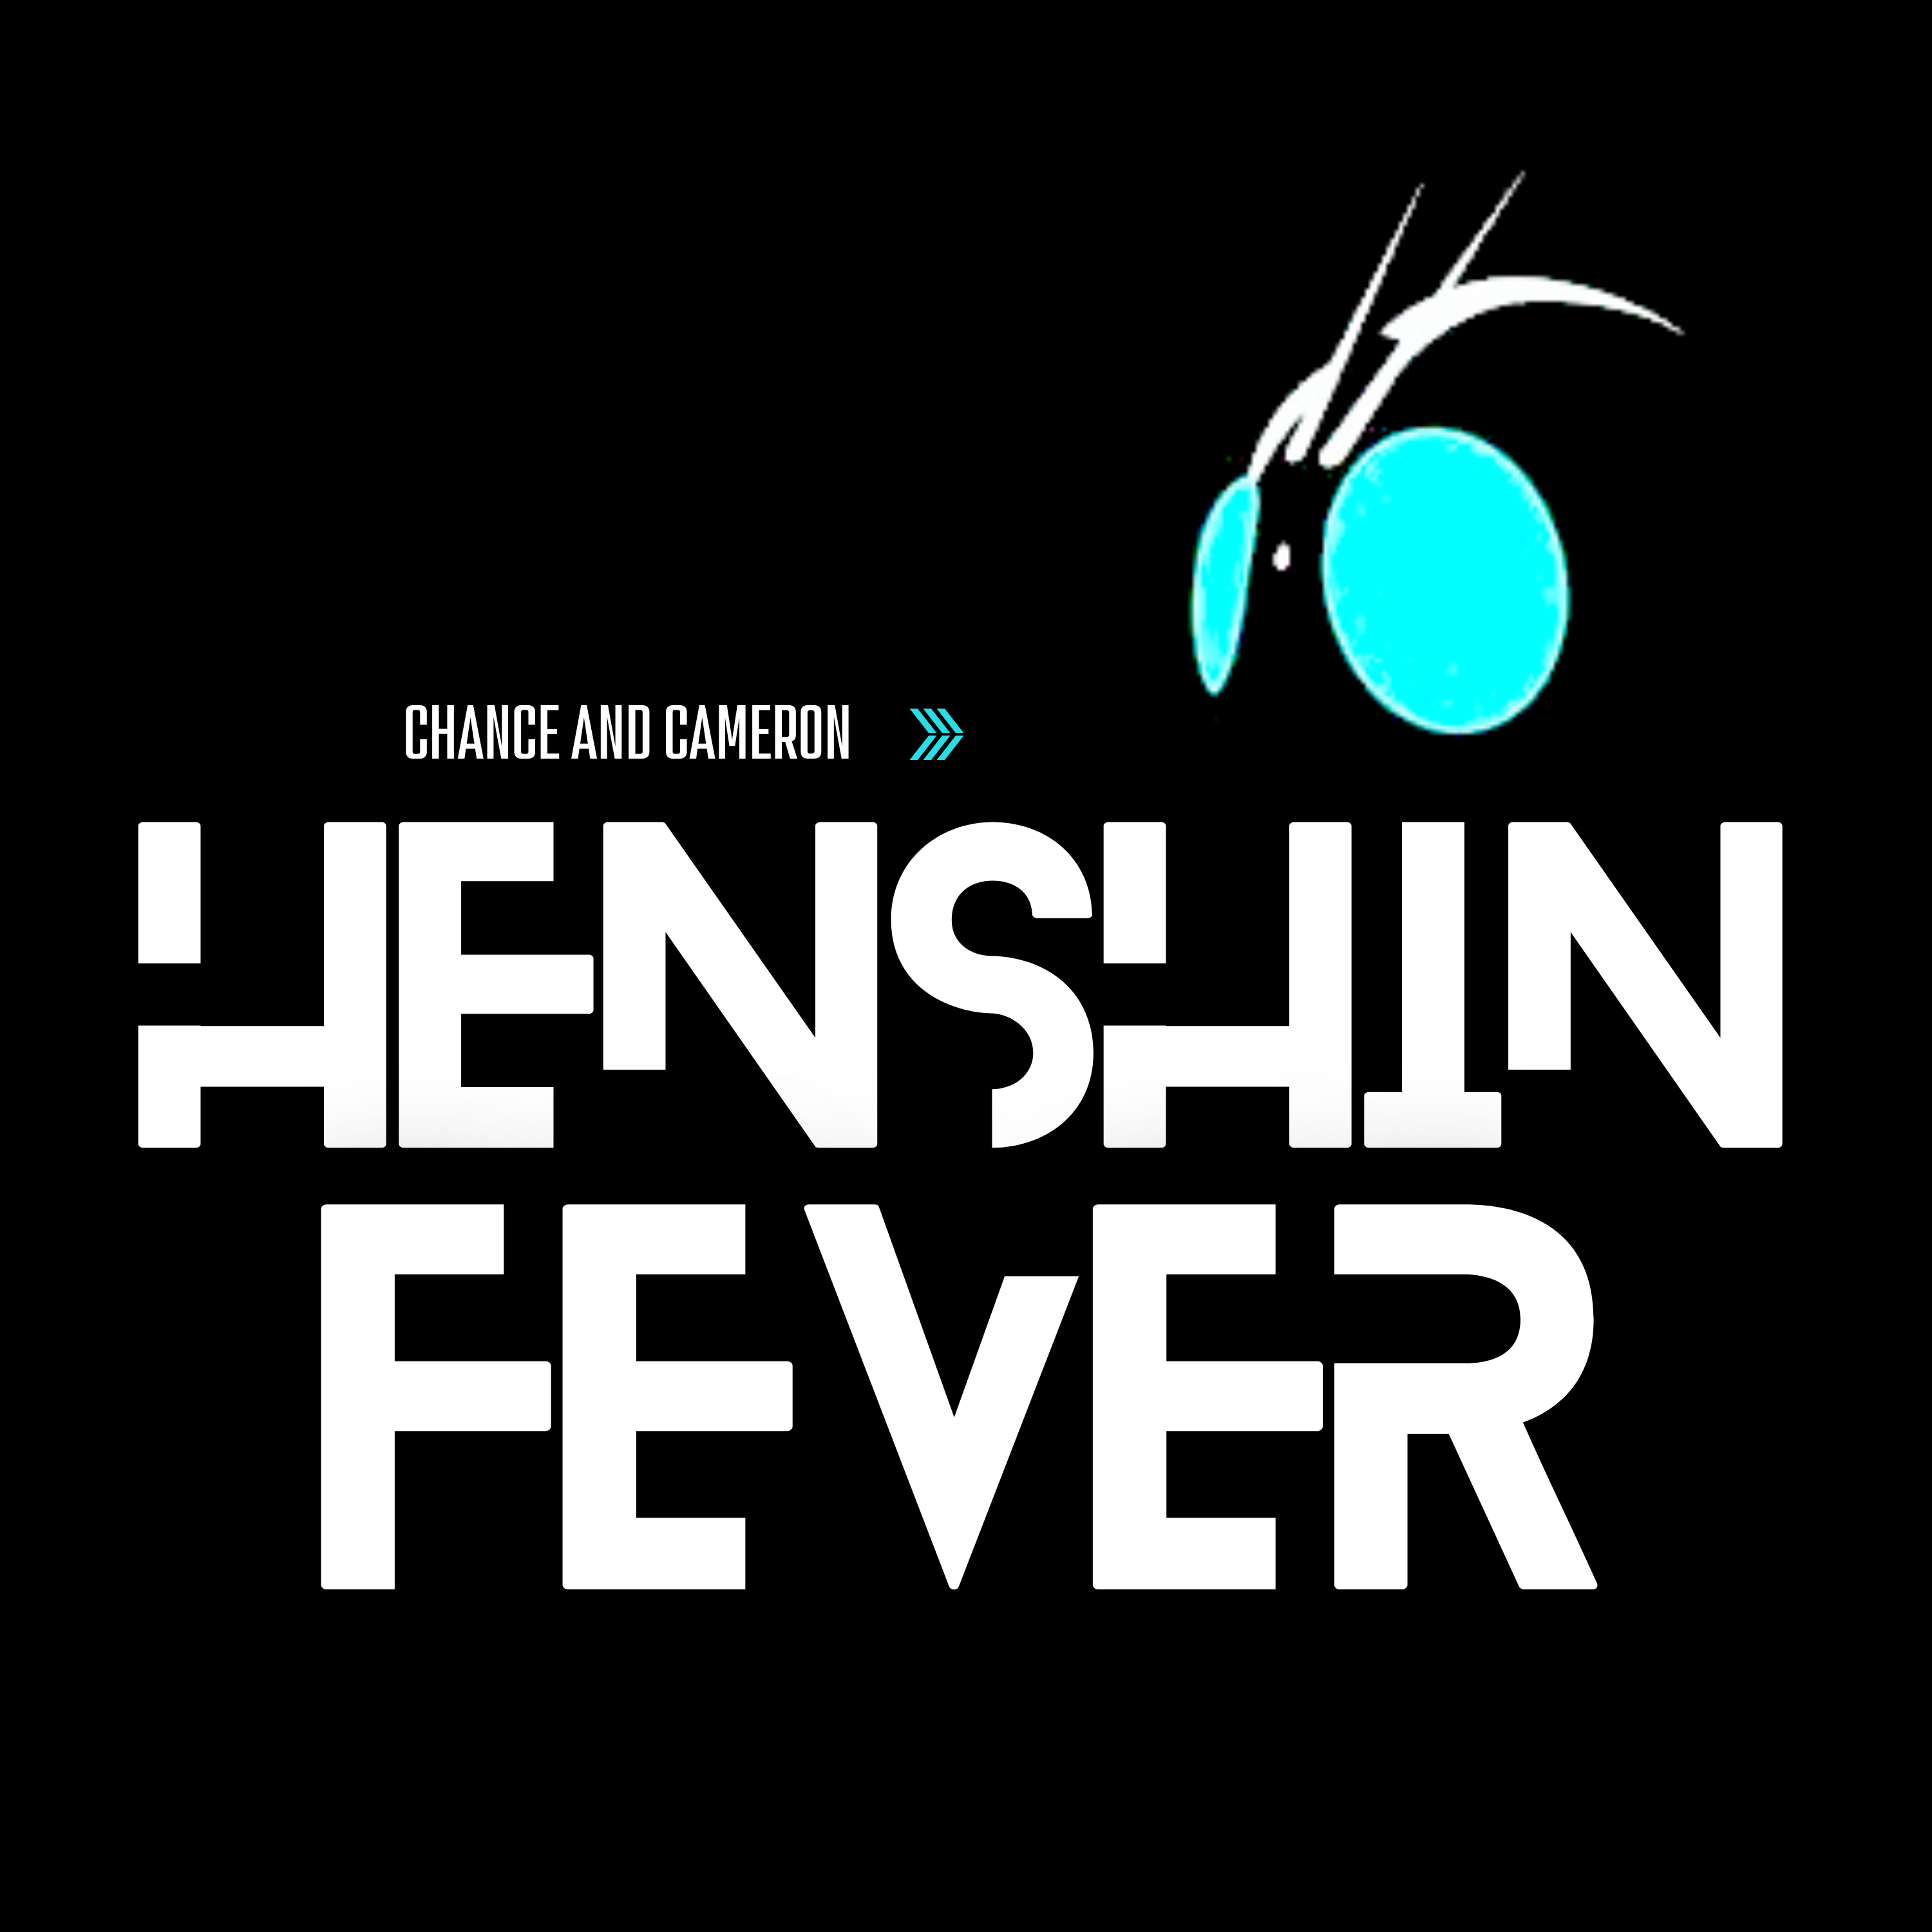 Gotchard Episodes 13-15 - Henshin Fever